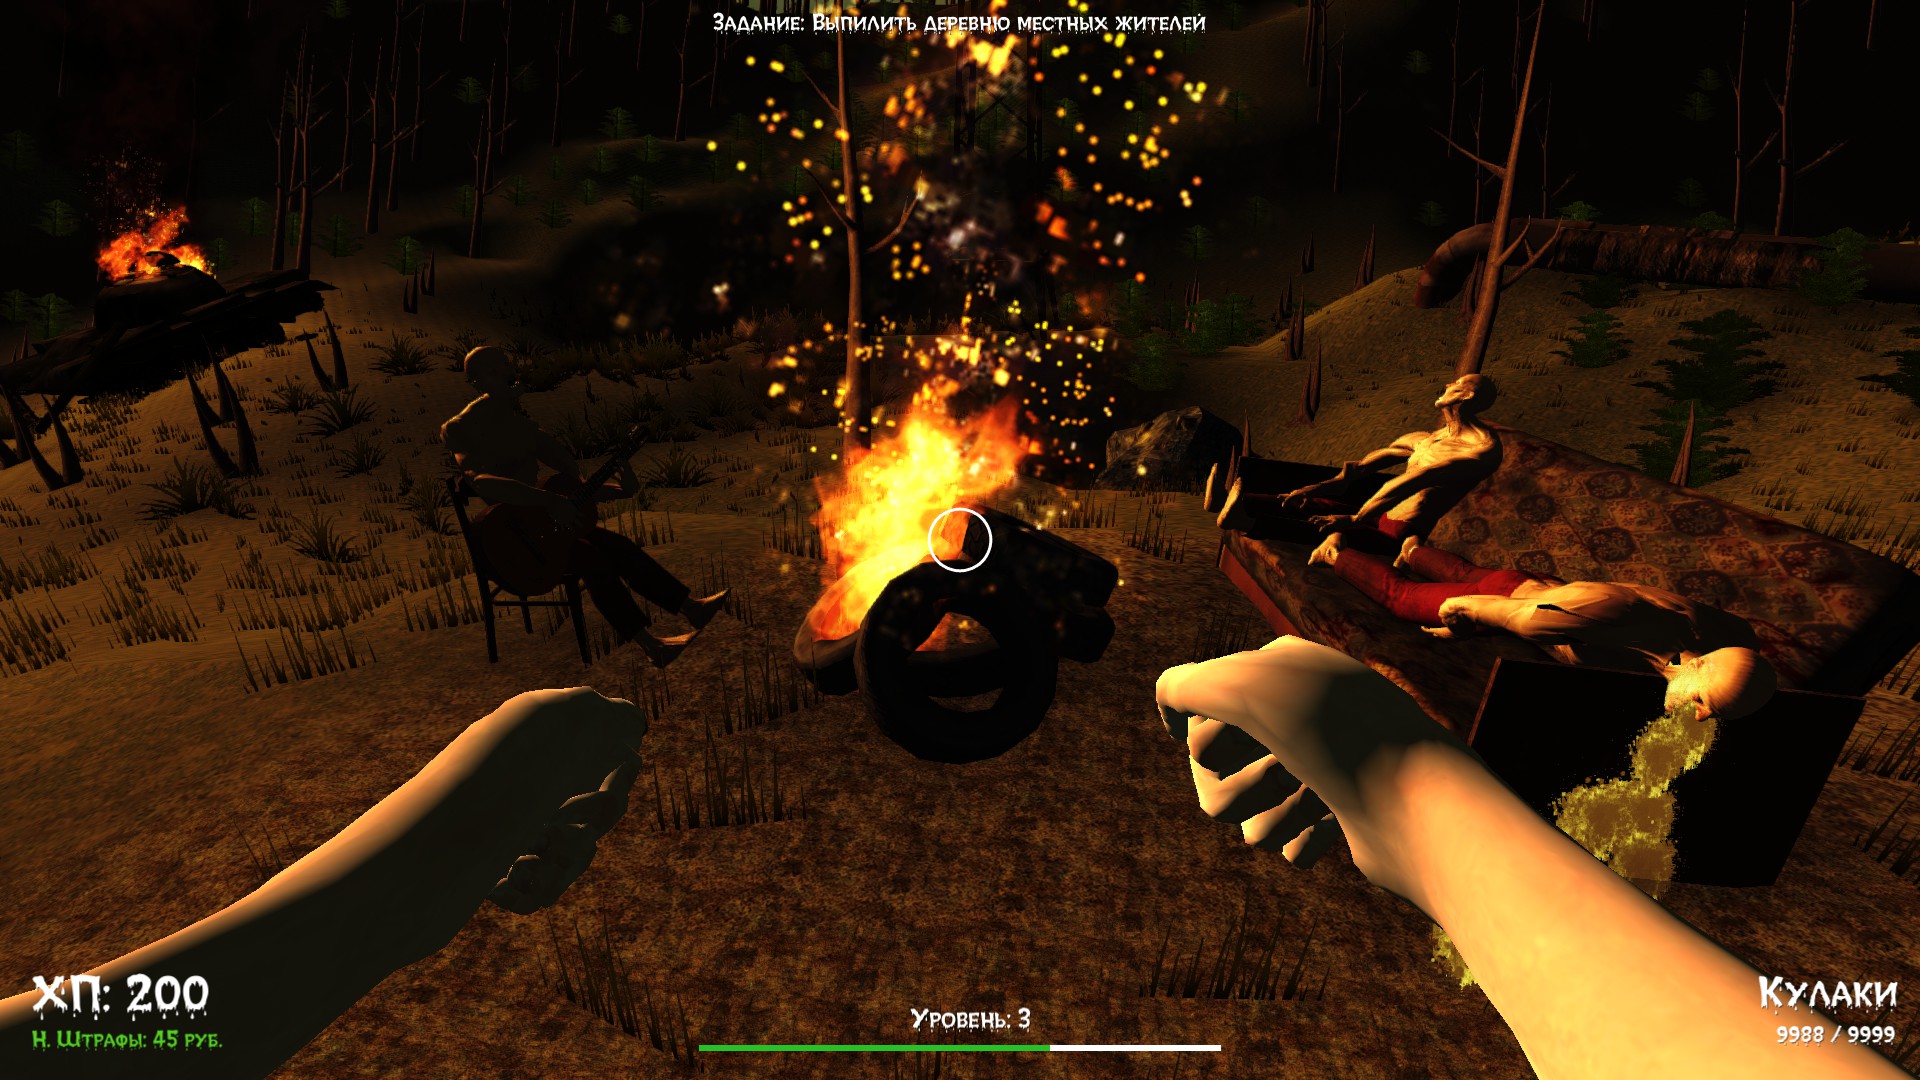 DOKA 2: Humans, Wizards and Elves DLC#1 screenshot